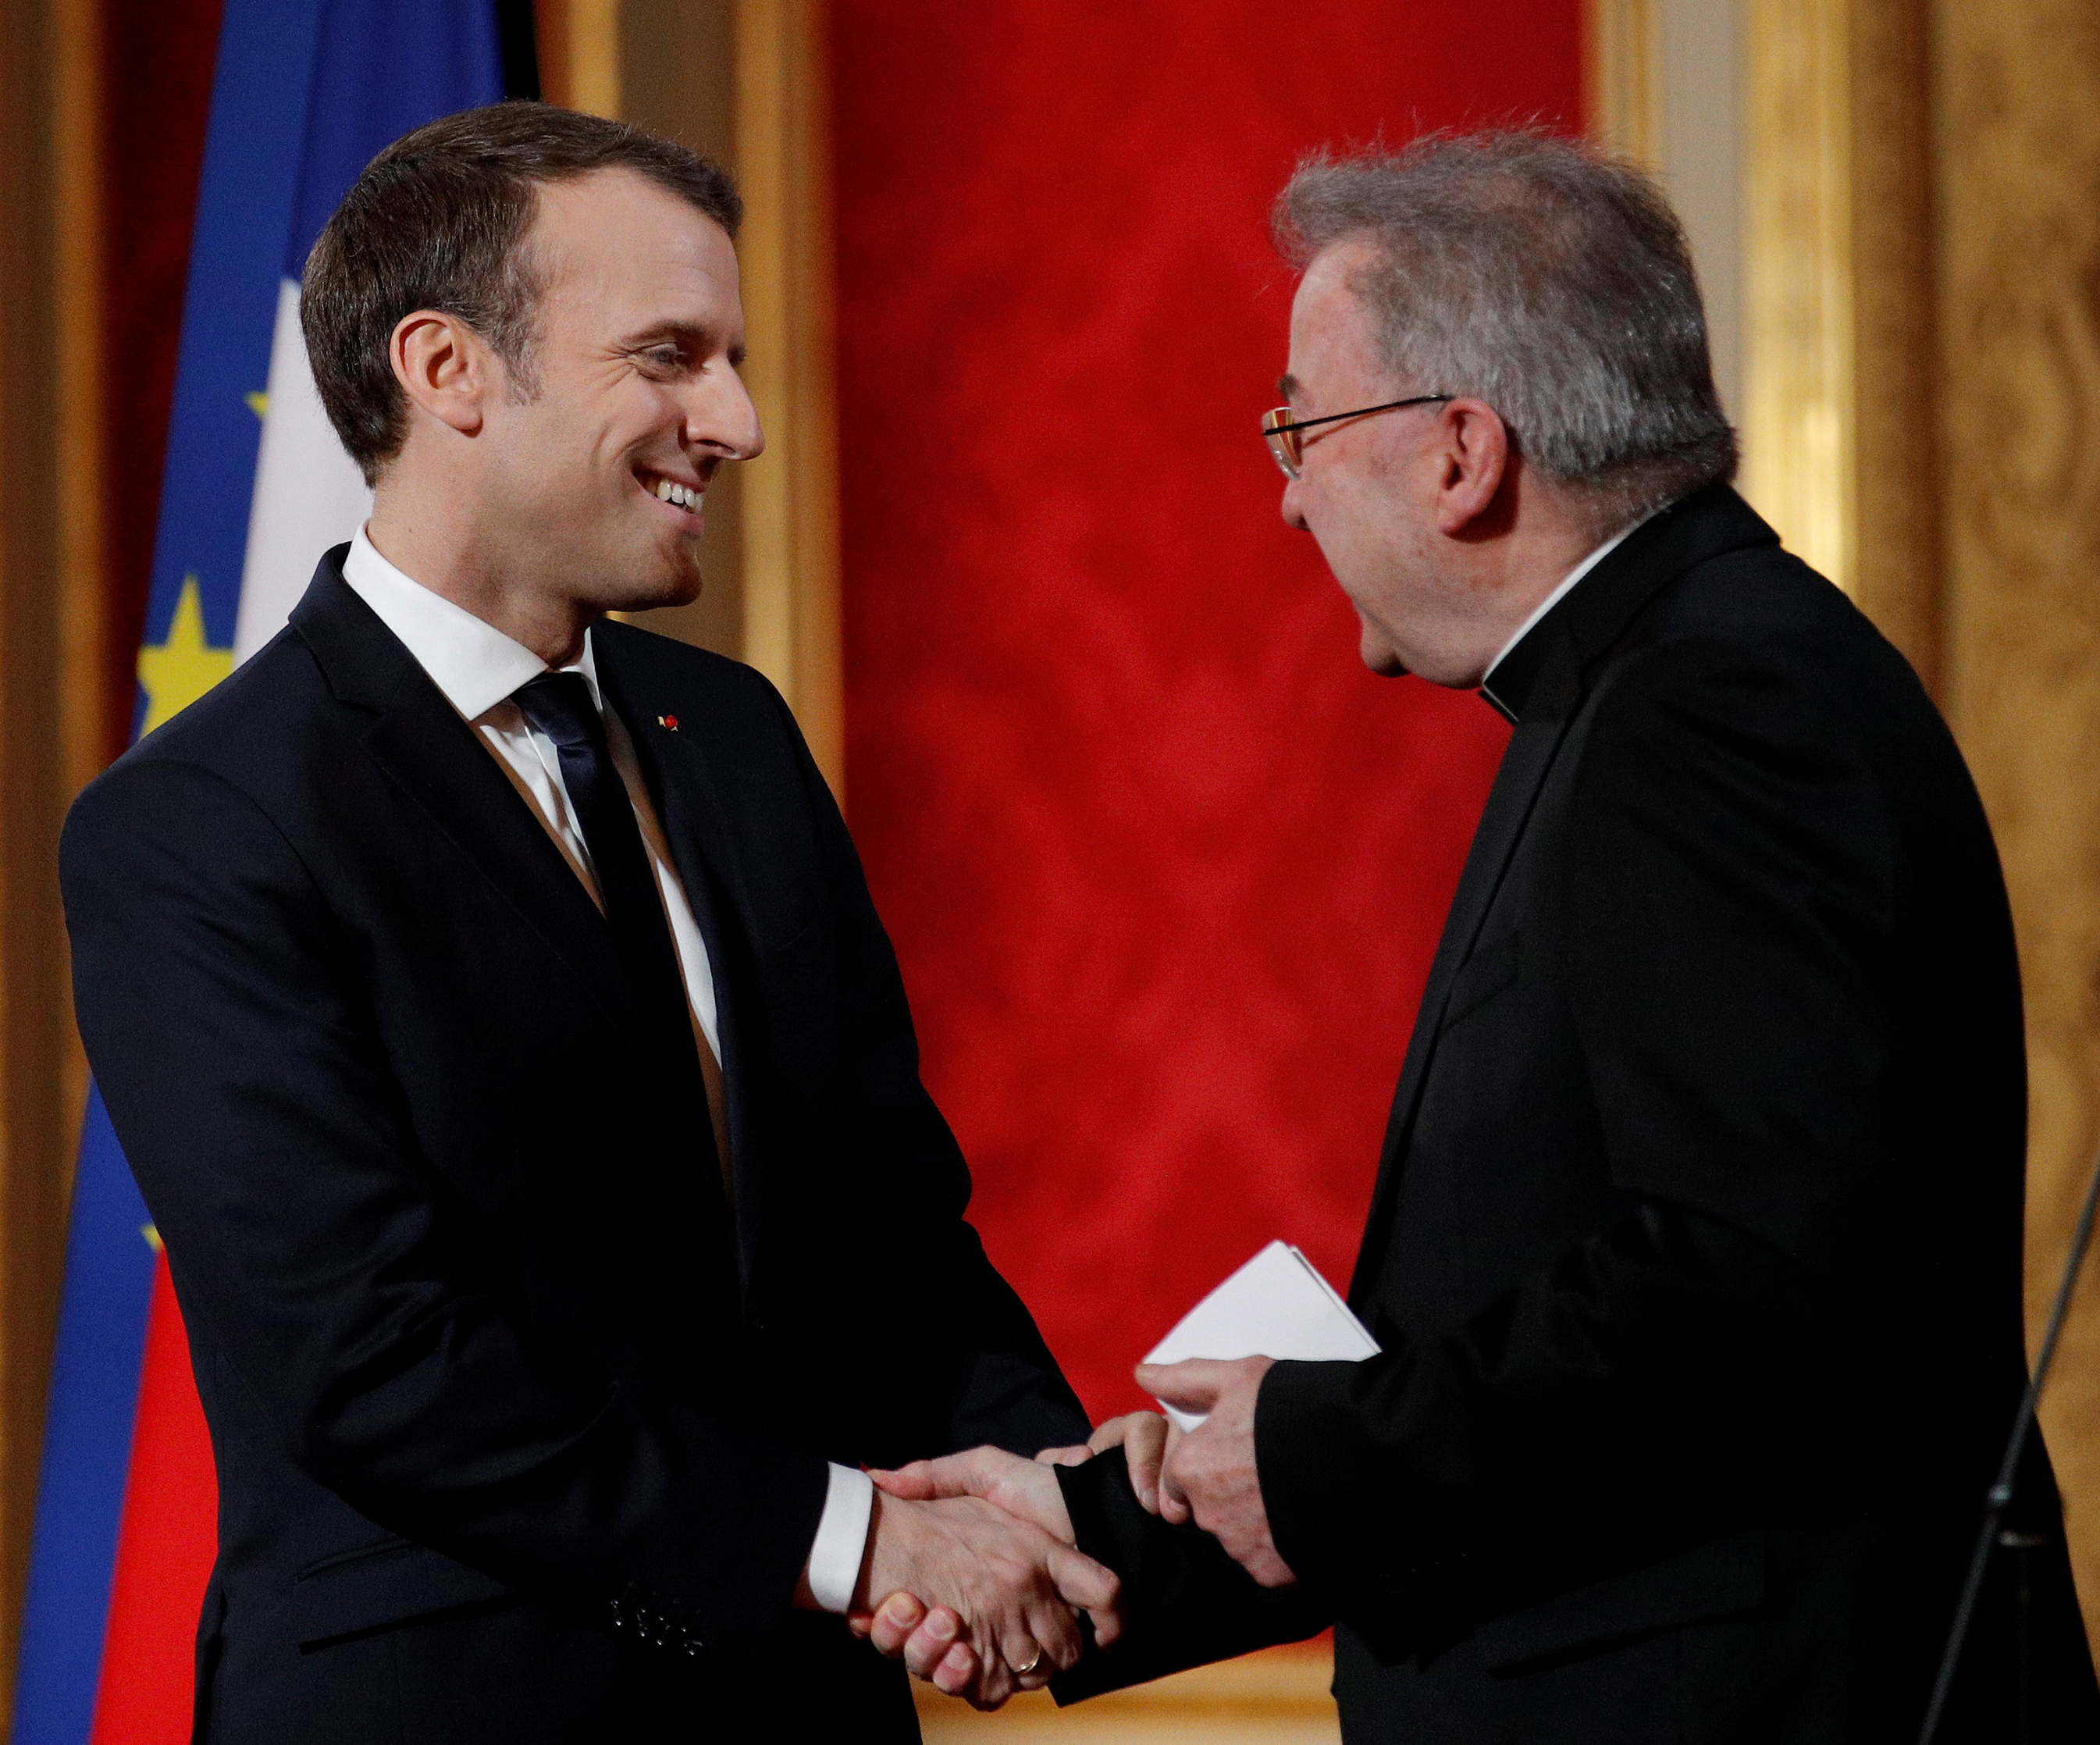 French police investigate sexual assault claim against Vatican nuncio